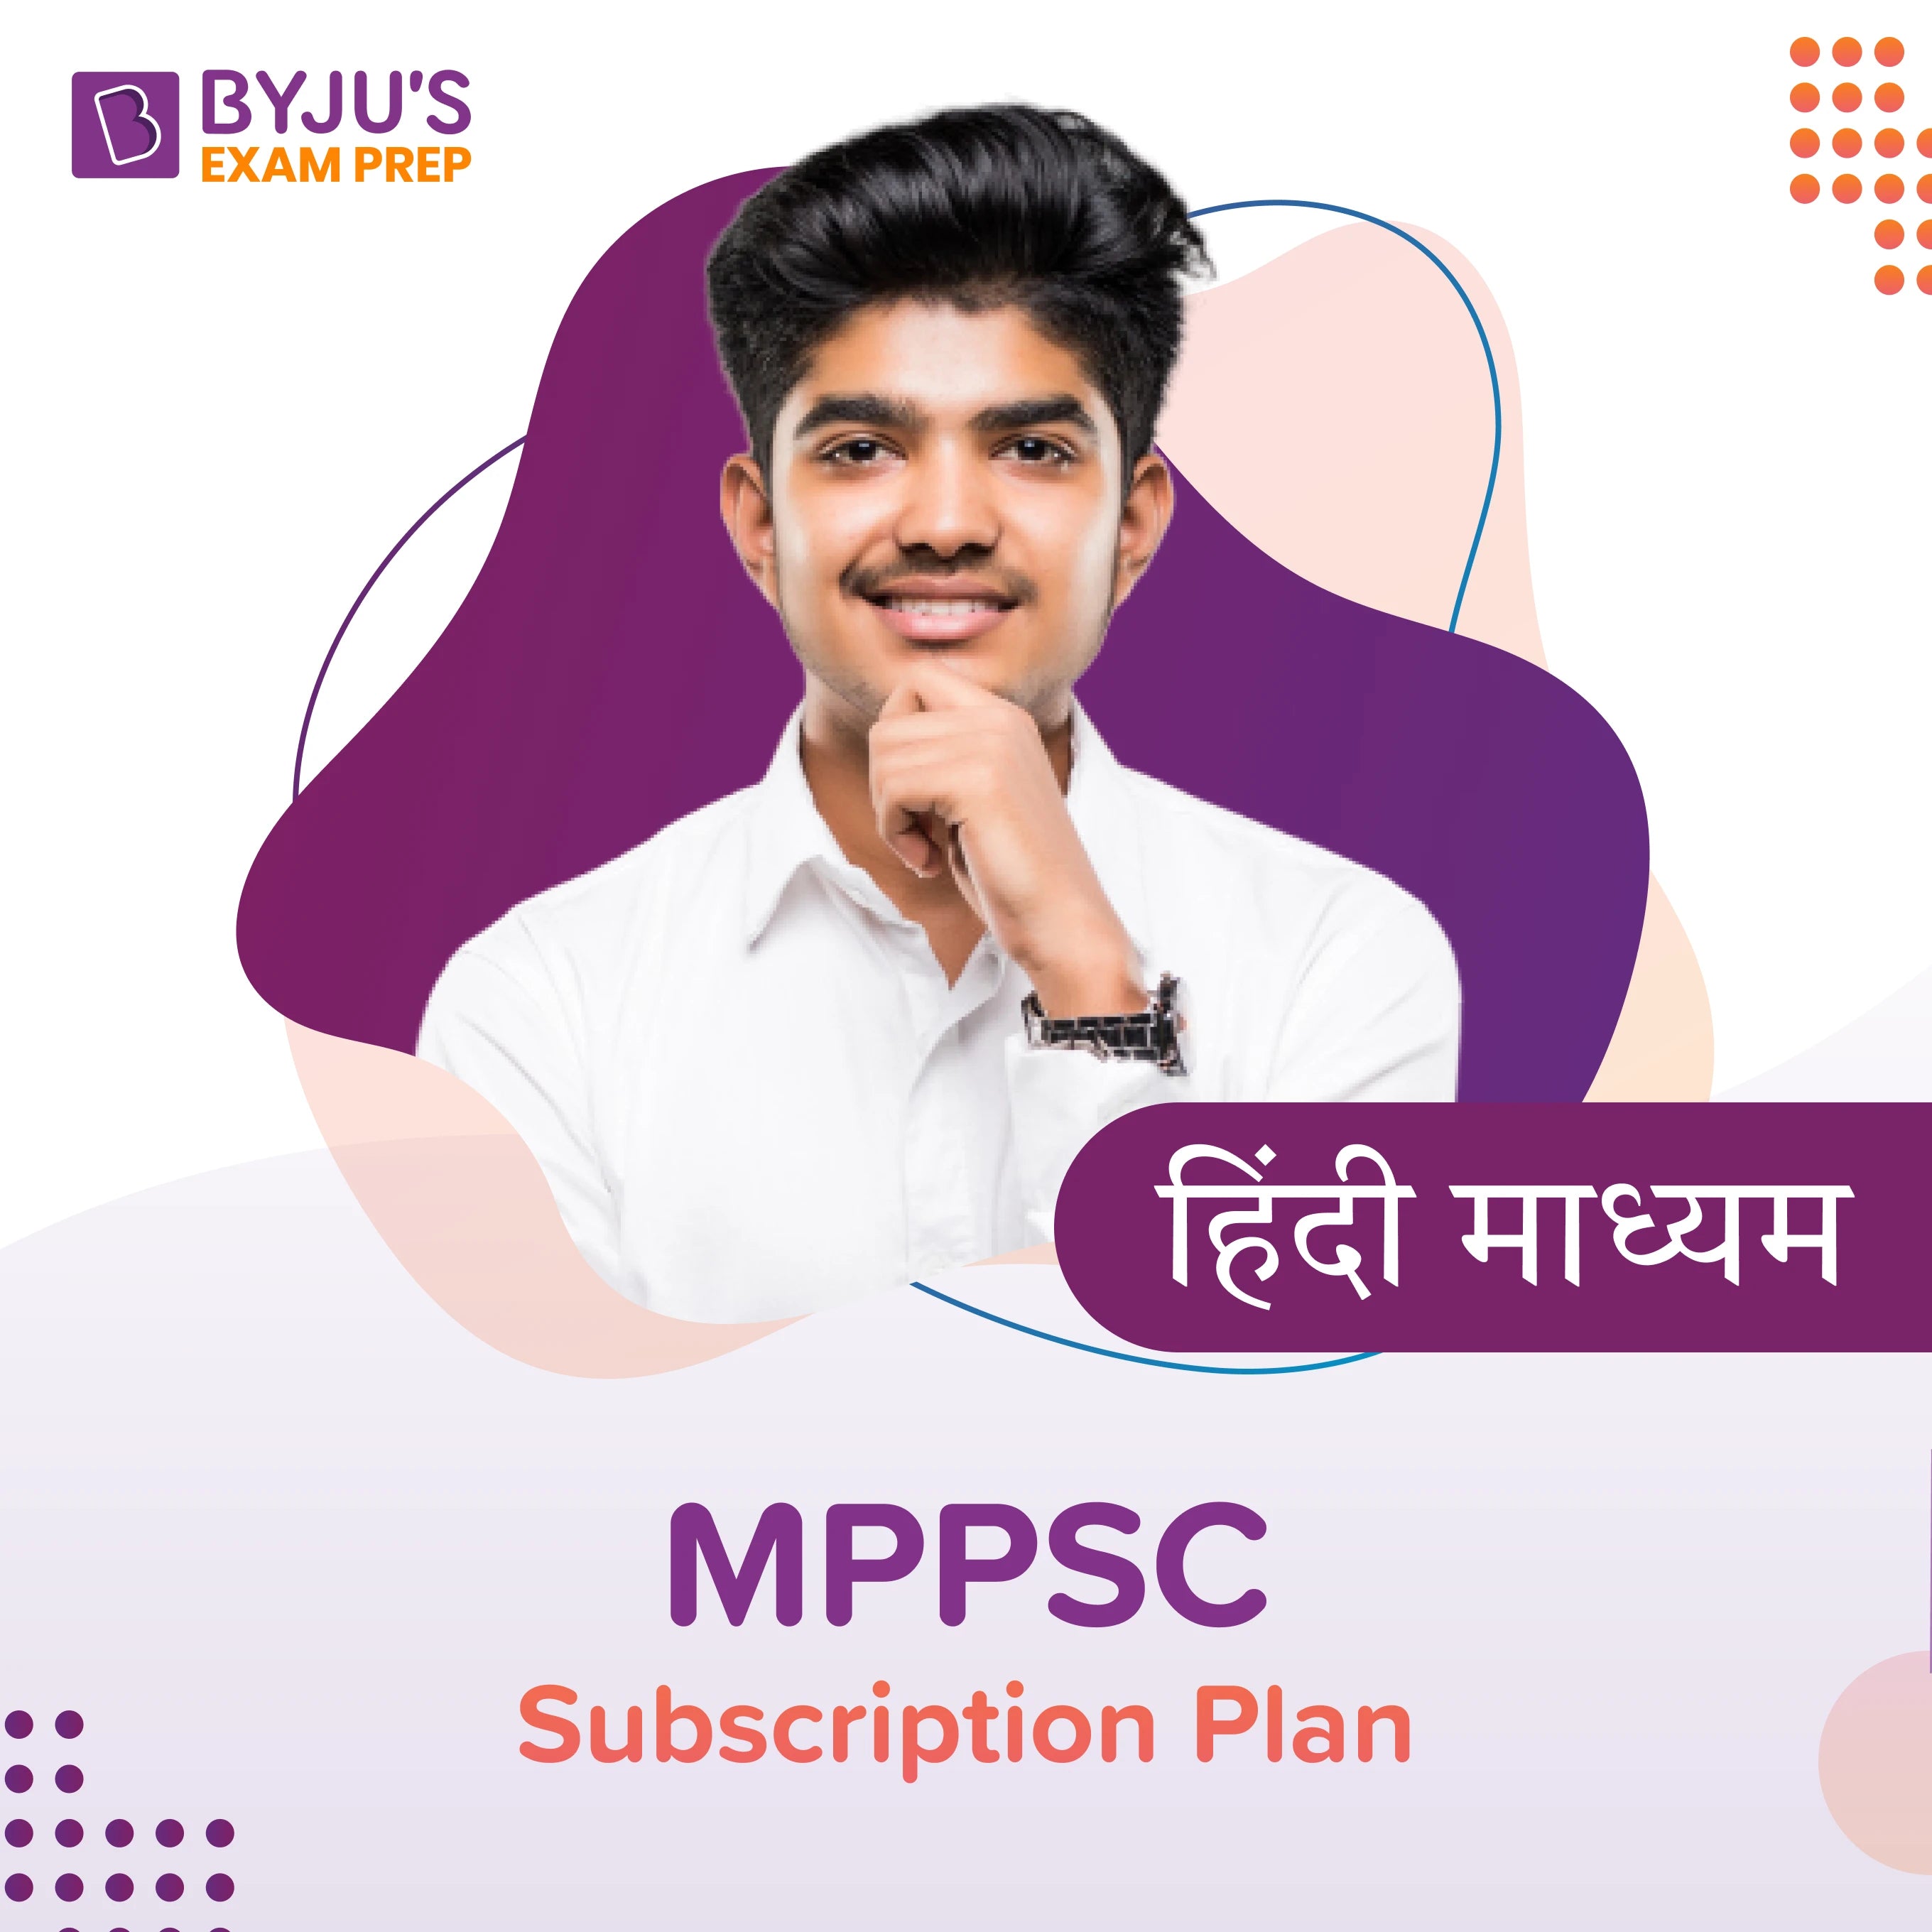 MPPSC - Subscription Plan